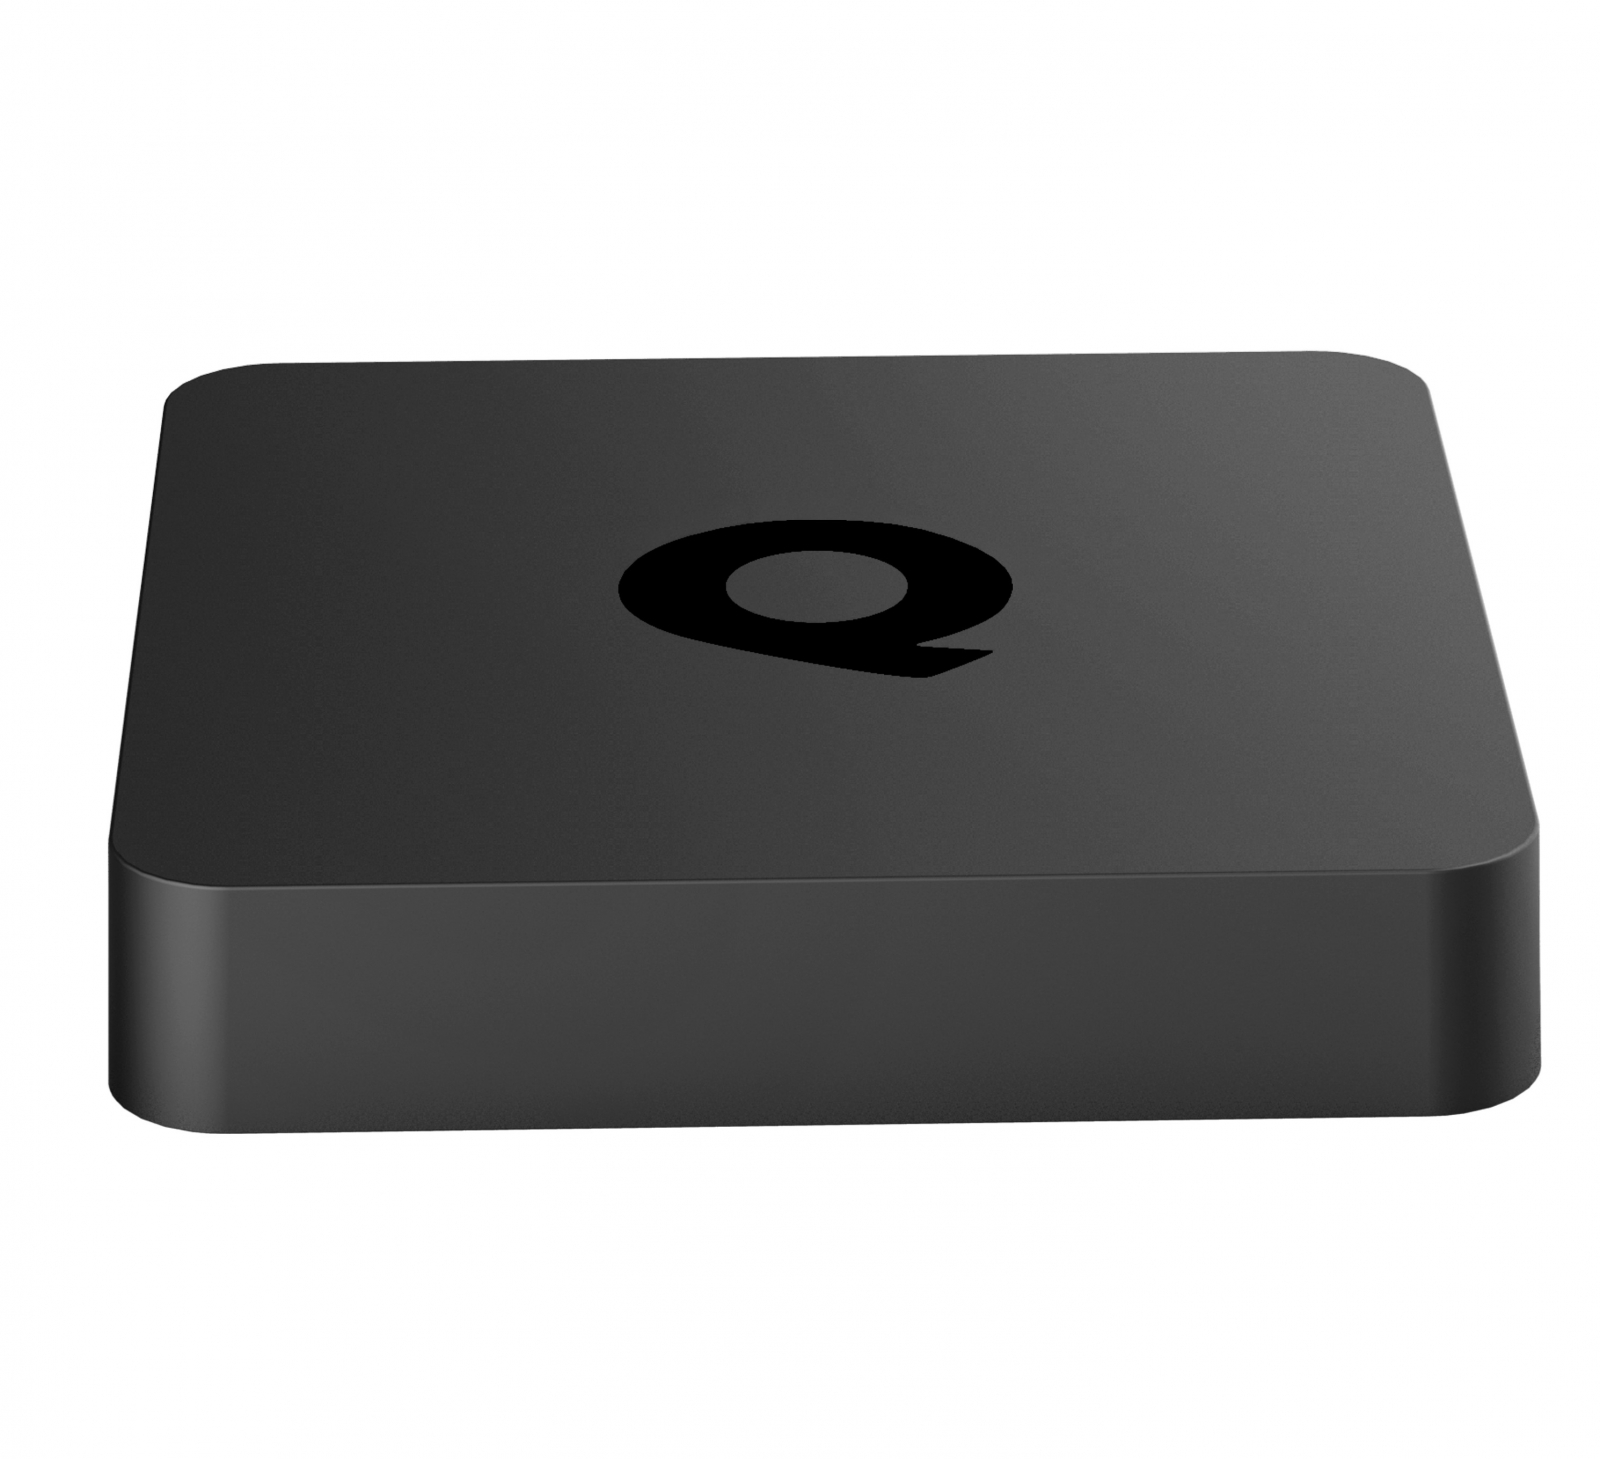 TV Box iSEN  Q1  Smart Media Player, 4K, Control vocal, Multi-screen, HDR10, 2GB RAM, 16GB ROM,  And